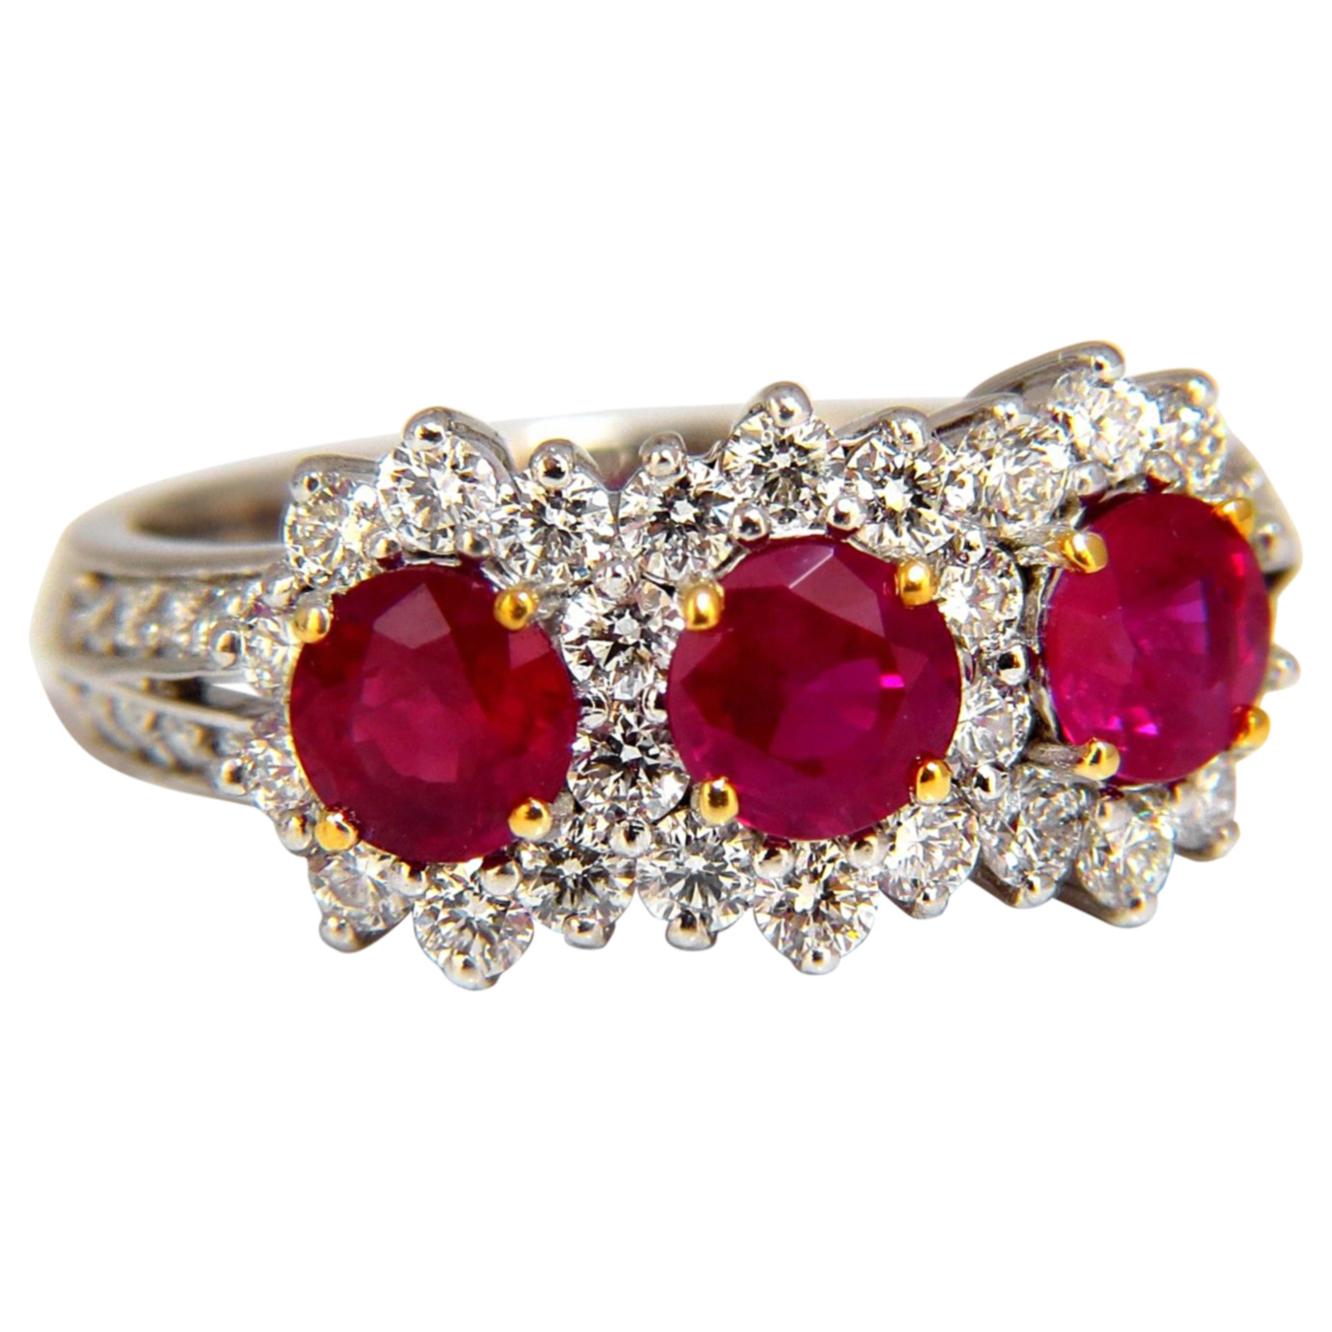 2.52 Carat Natural Vivid Red Ruby Diamonds Ring 14 Karat Three-Stone Halo Class For Sale